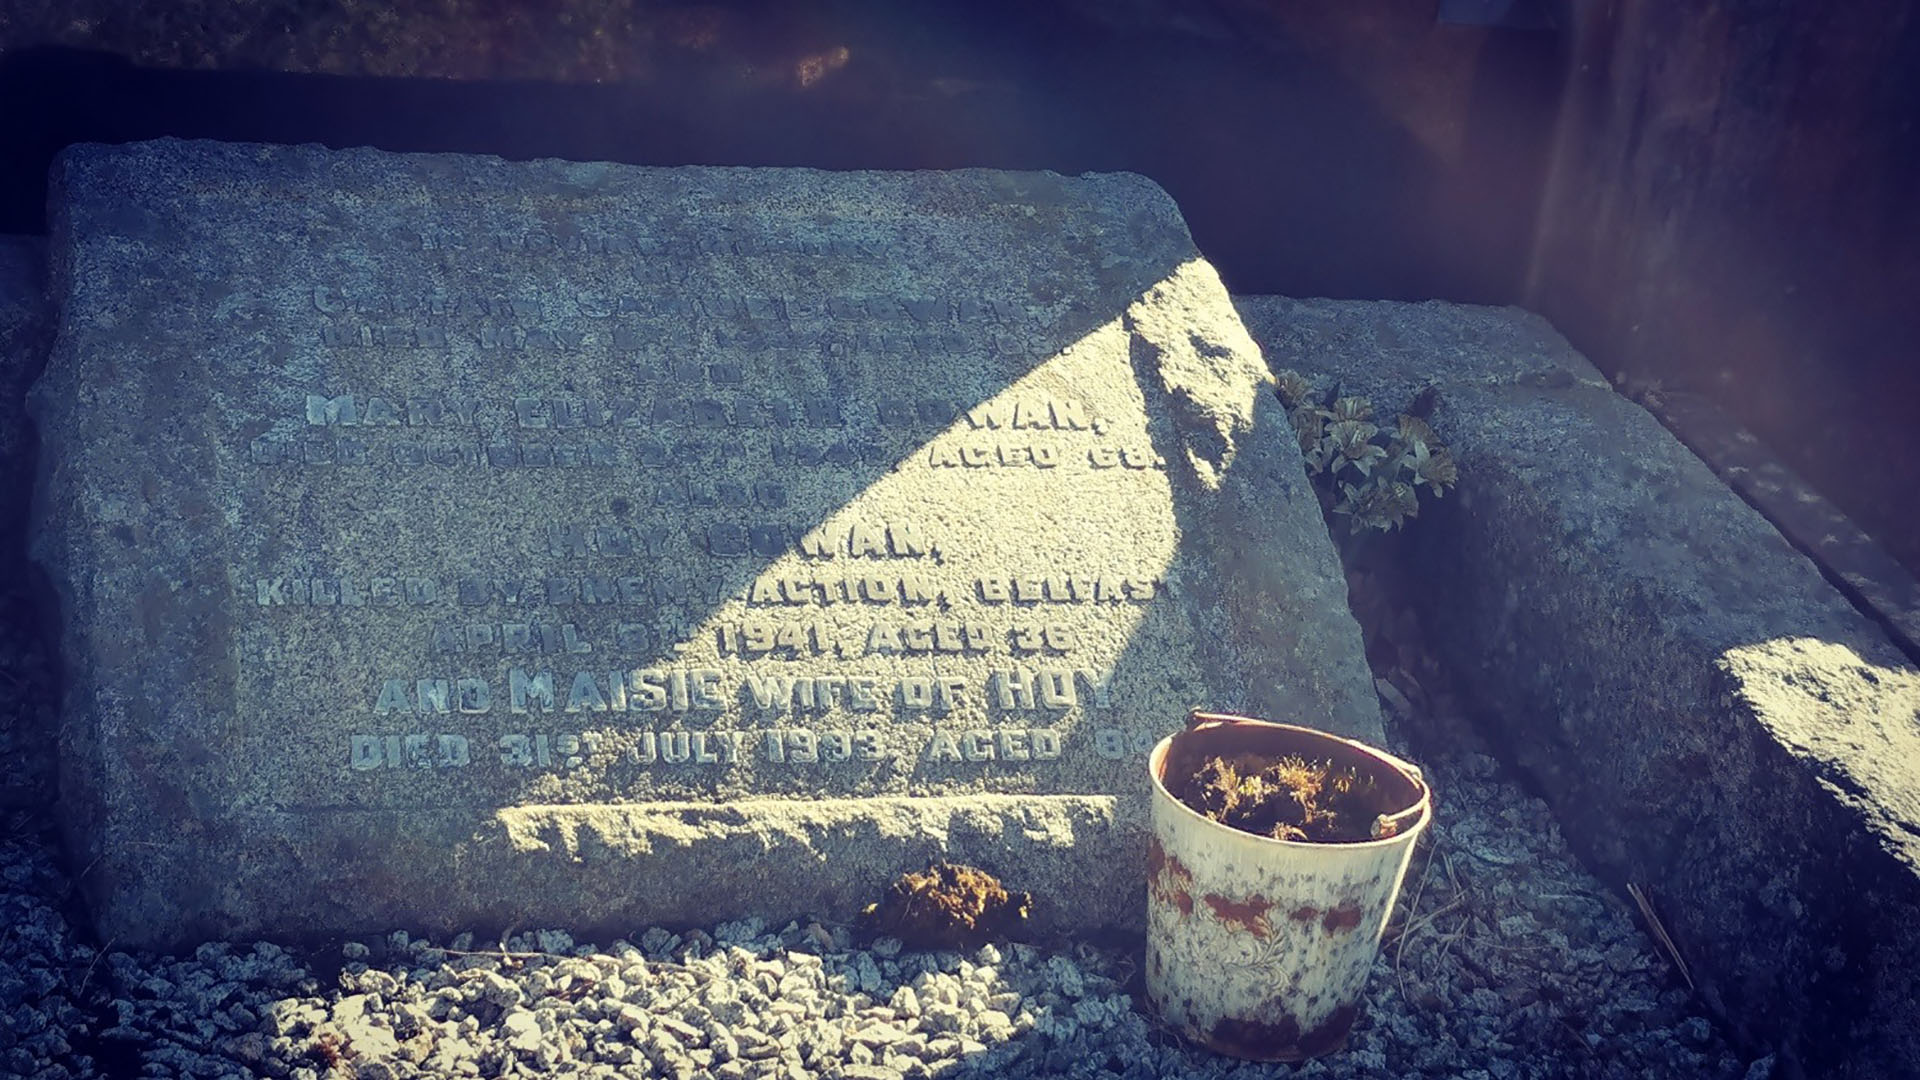 The grave of Samuel Hoy Gowan in Dundonald Cemetery, Dundonald, Co. Down